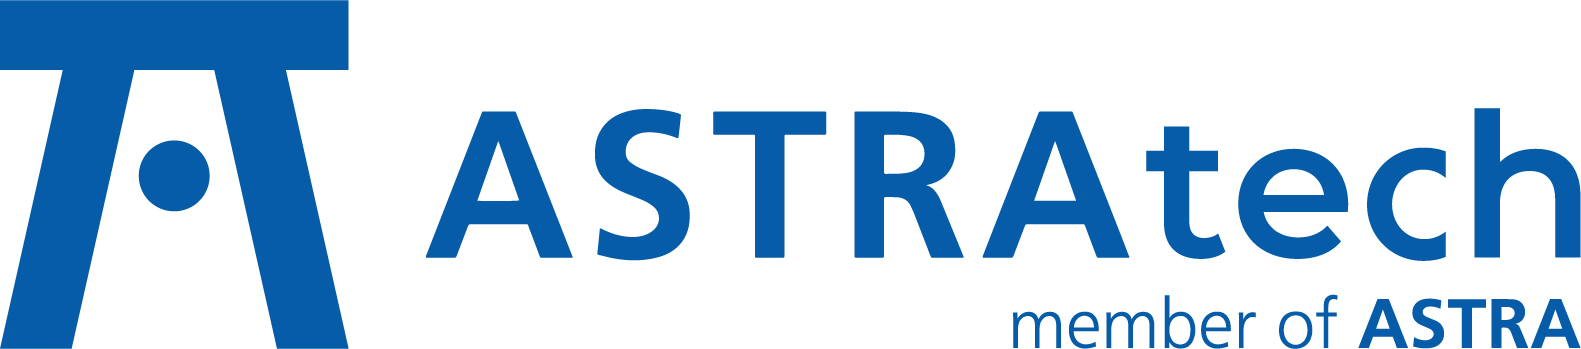 logo Politeknik Astra